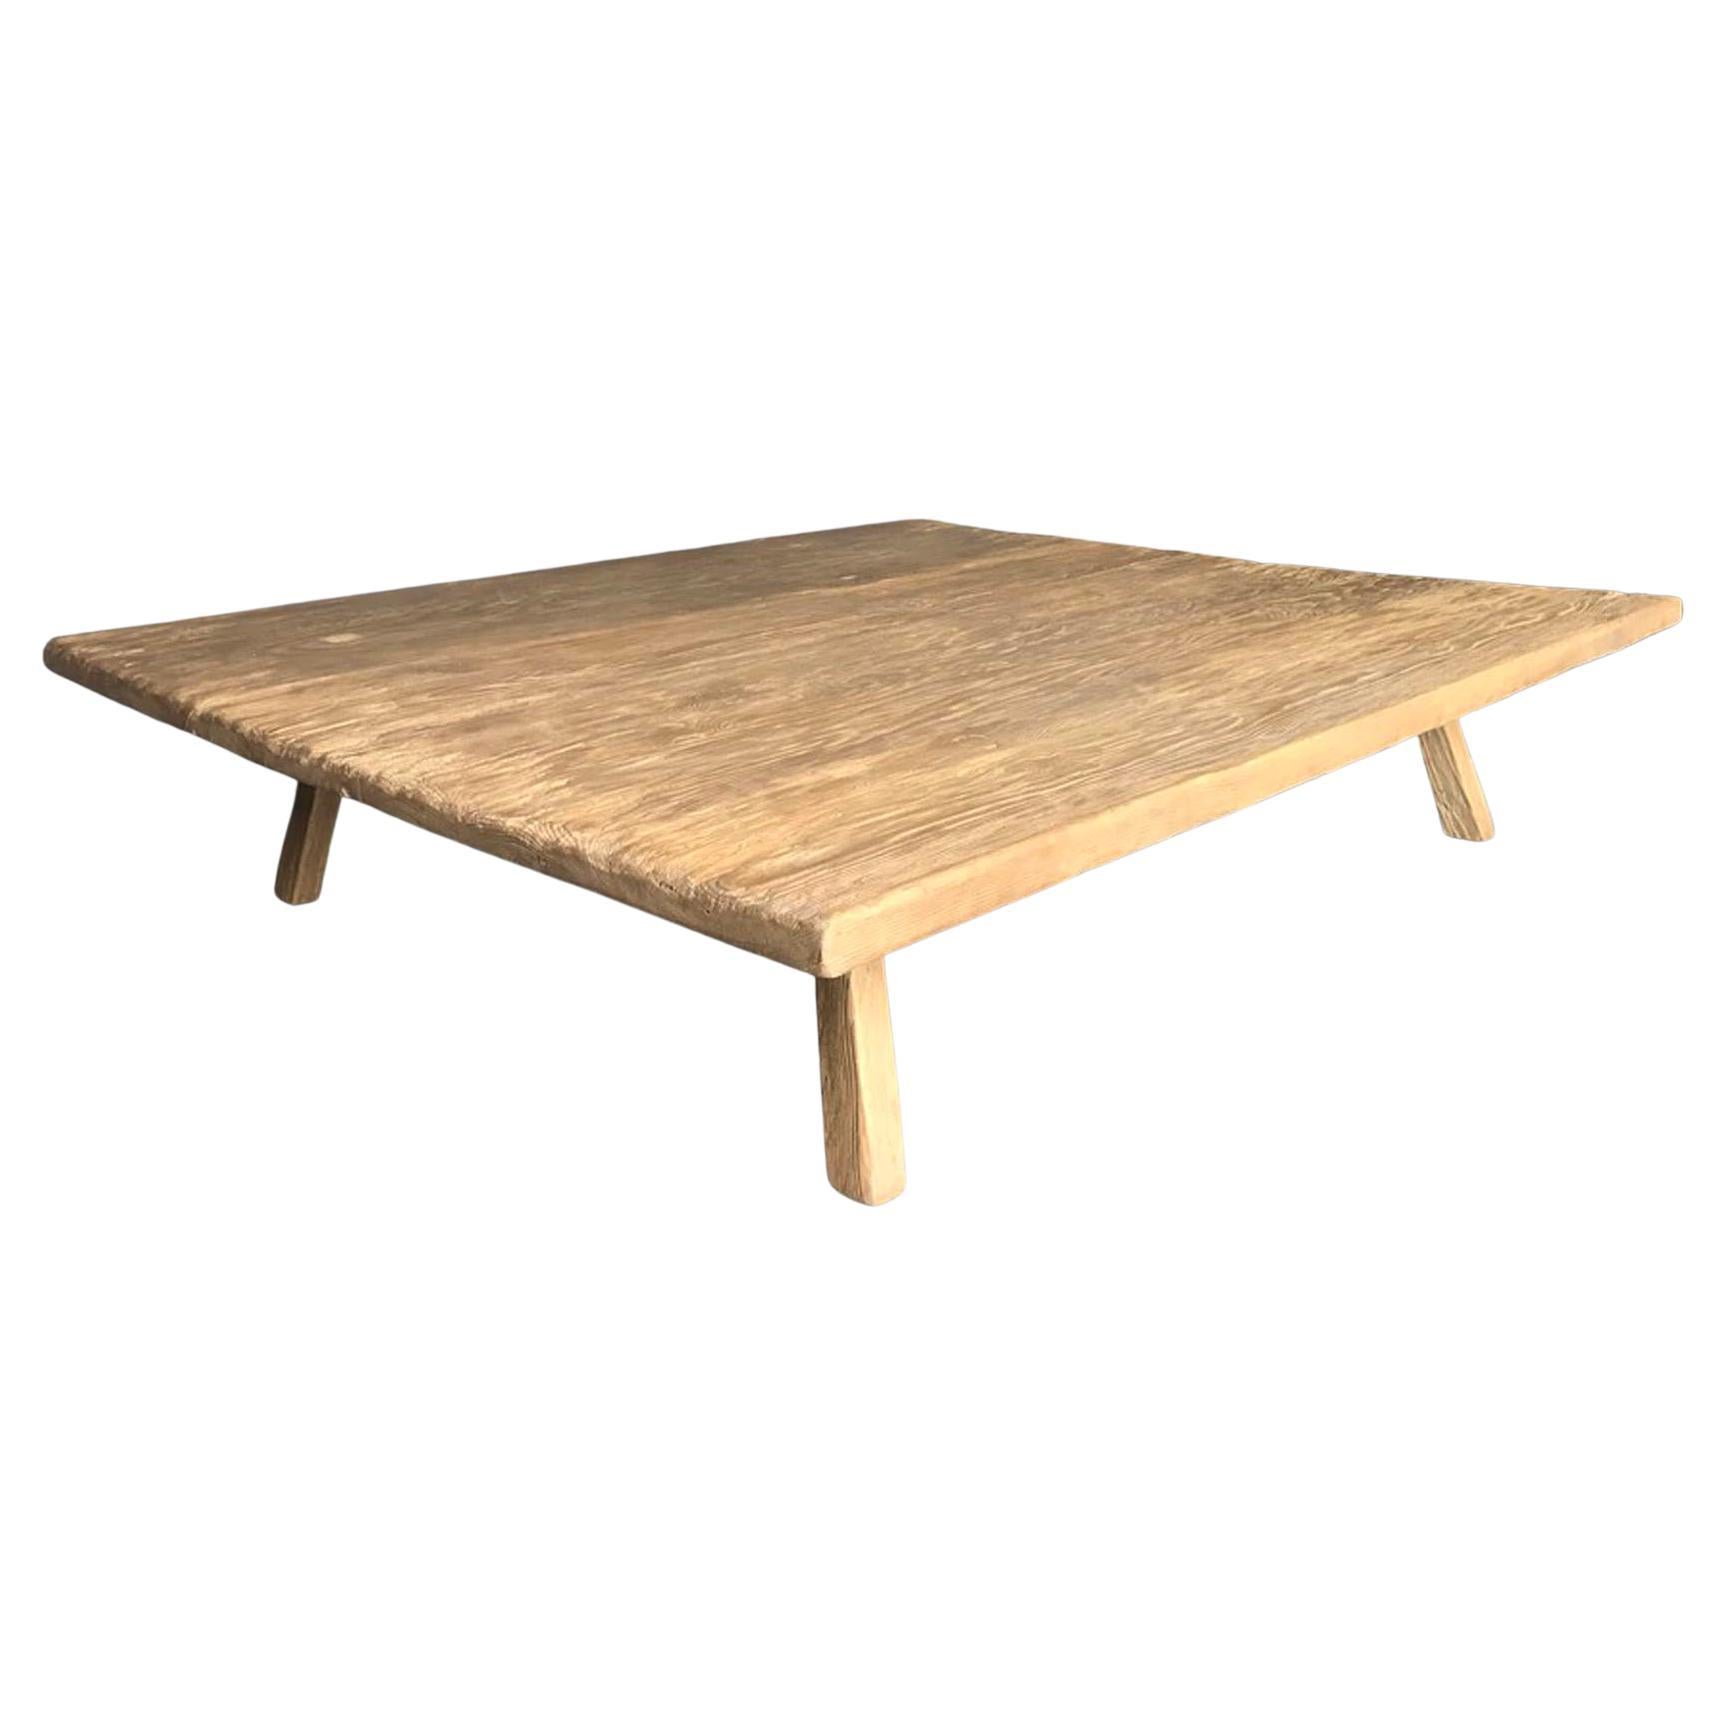 Custom Rustic Reclaimed Wood Coffee Table